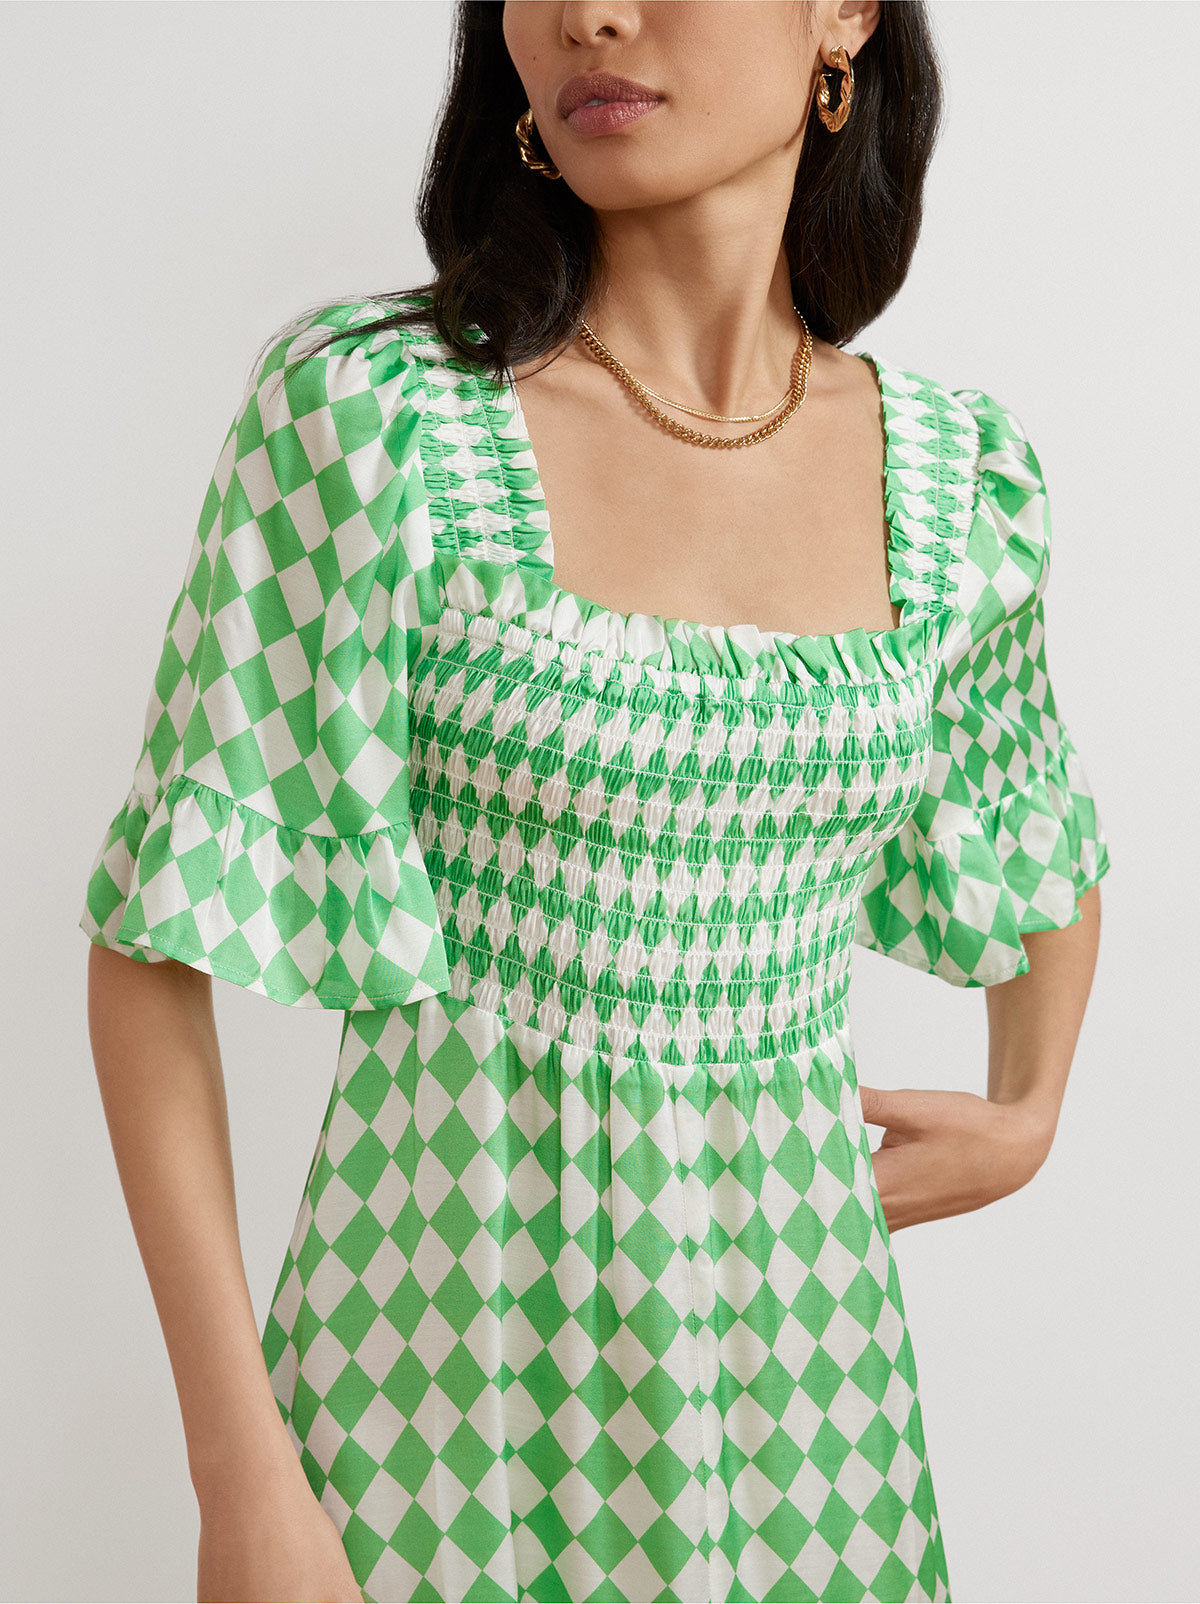 Arabella Green Checker Dress By KITRI Studio